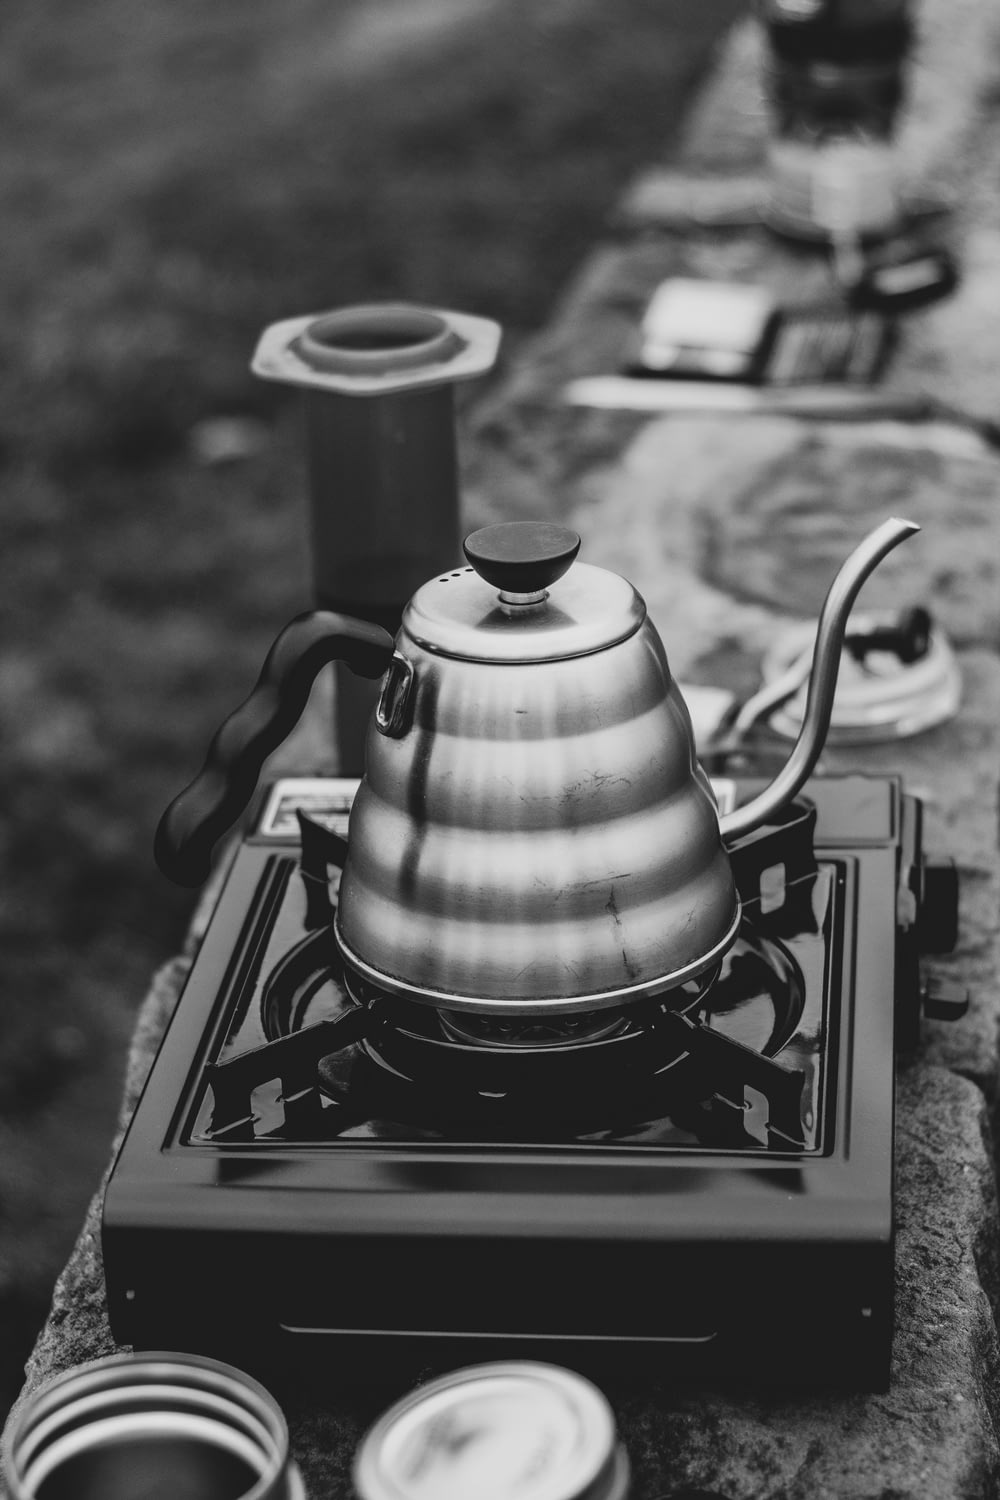 gray stainless steel teapot